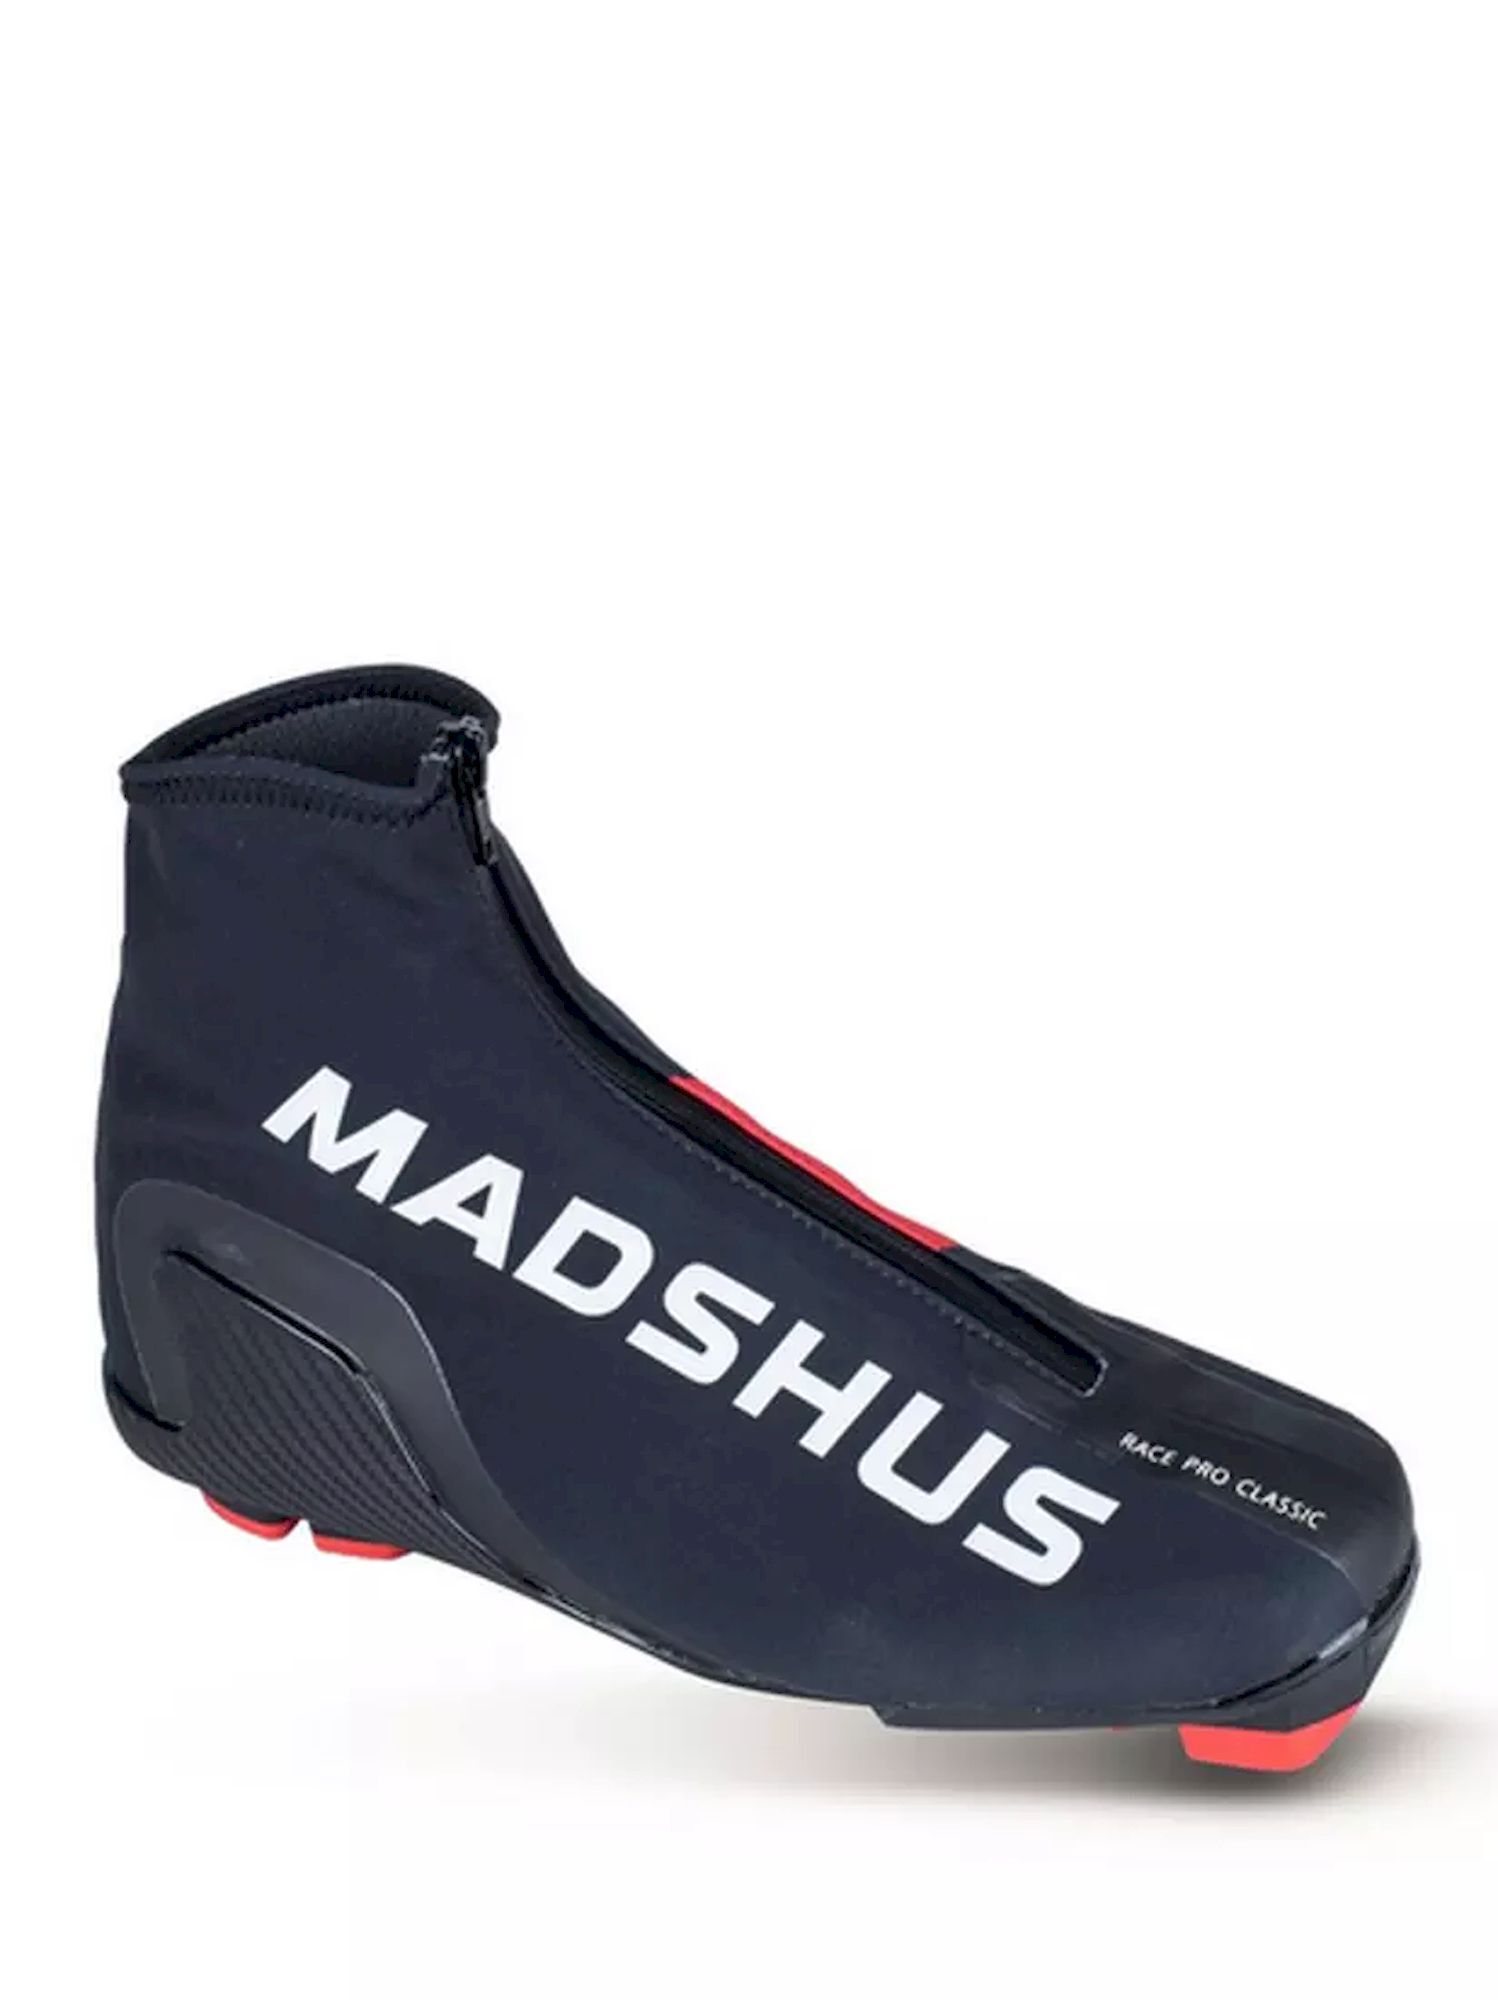 Madshus Race Pro Classic - Langlaufschuhe | Hardloop